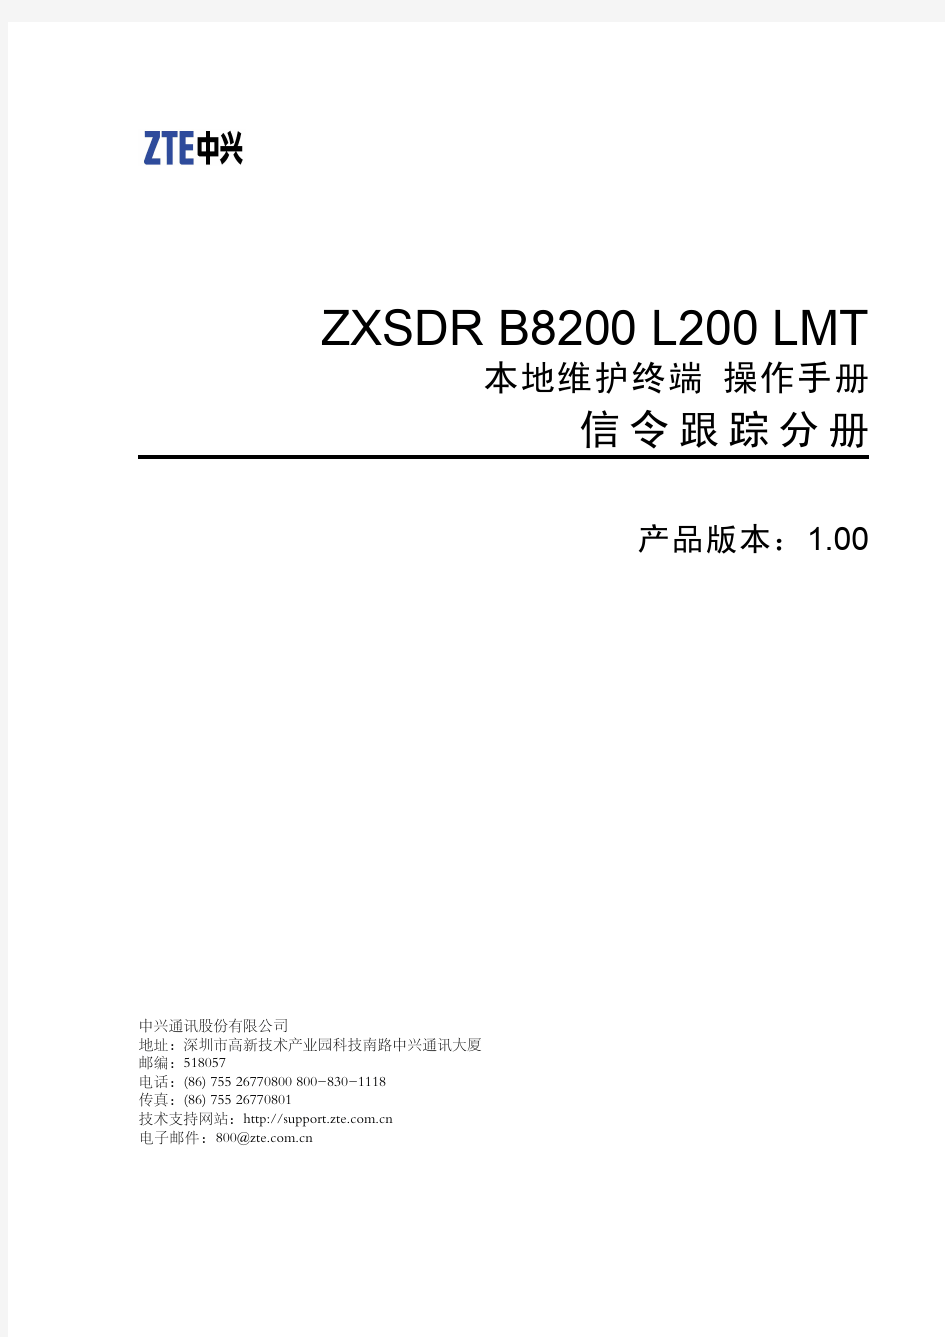 ZXSDR B8200操作手册信令跟踪分册